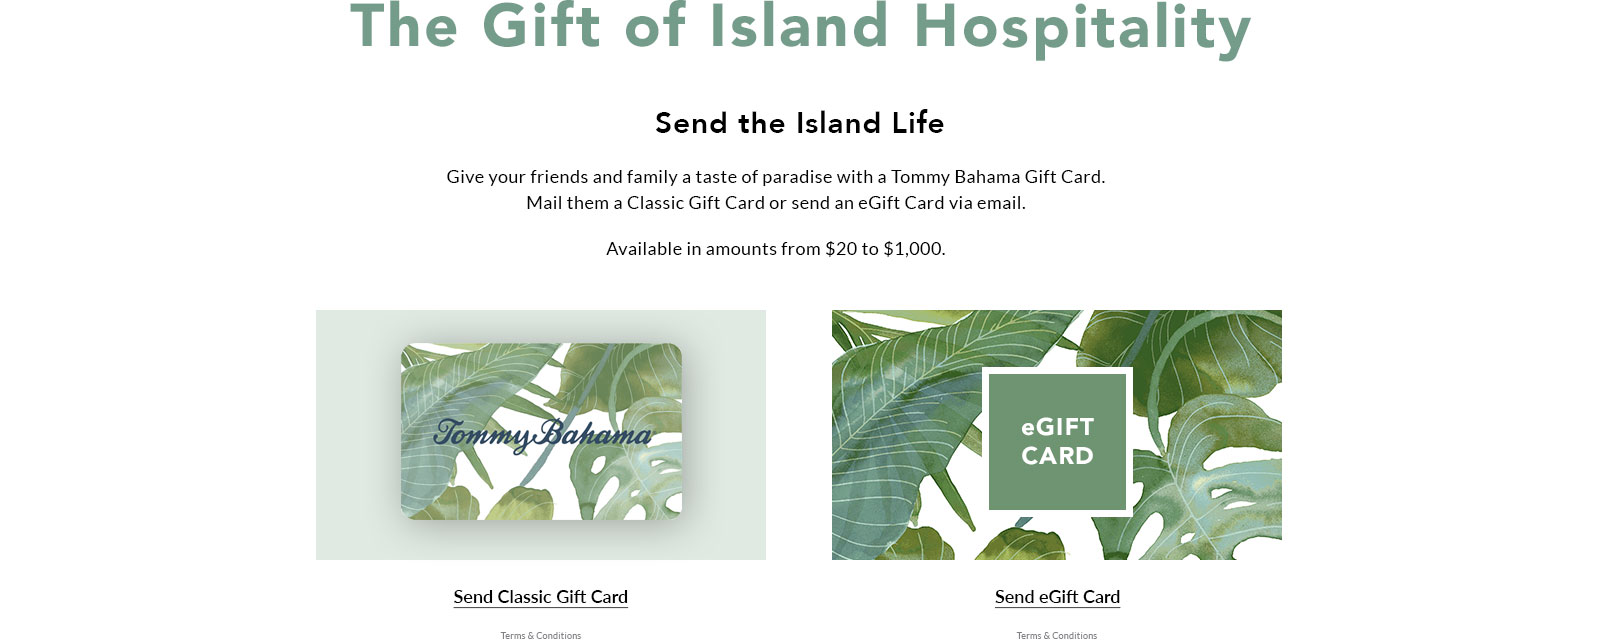 The Gift of Island Hospitality